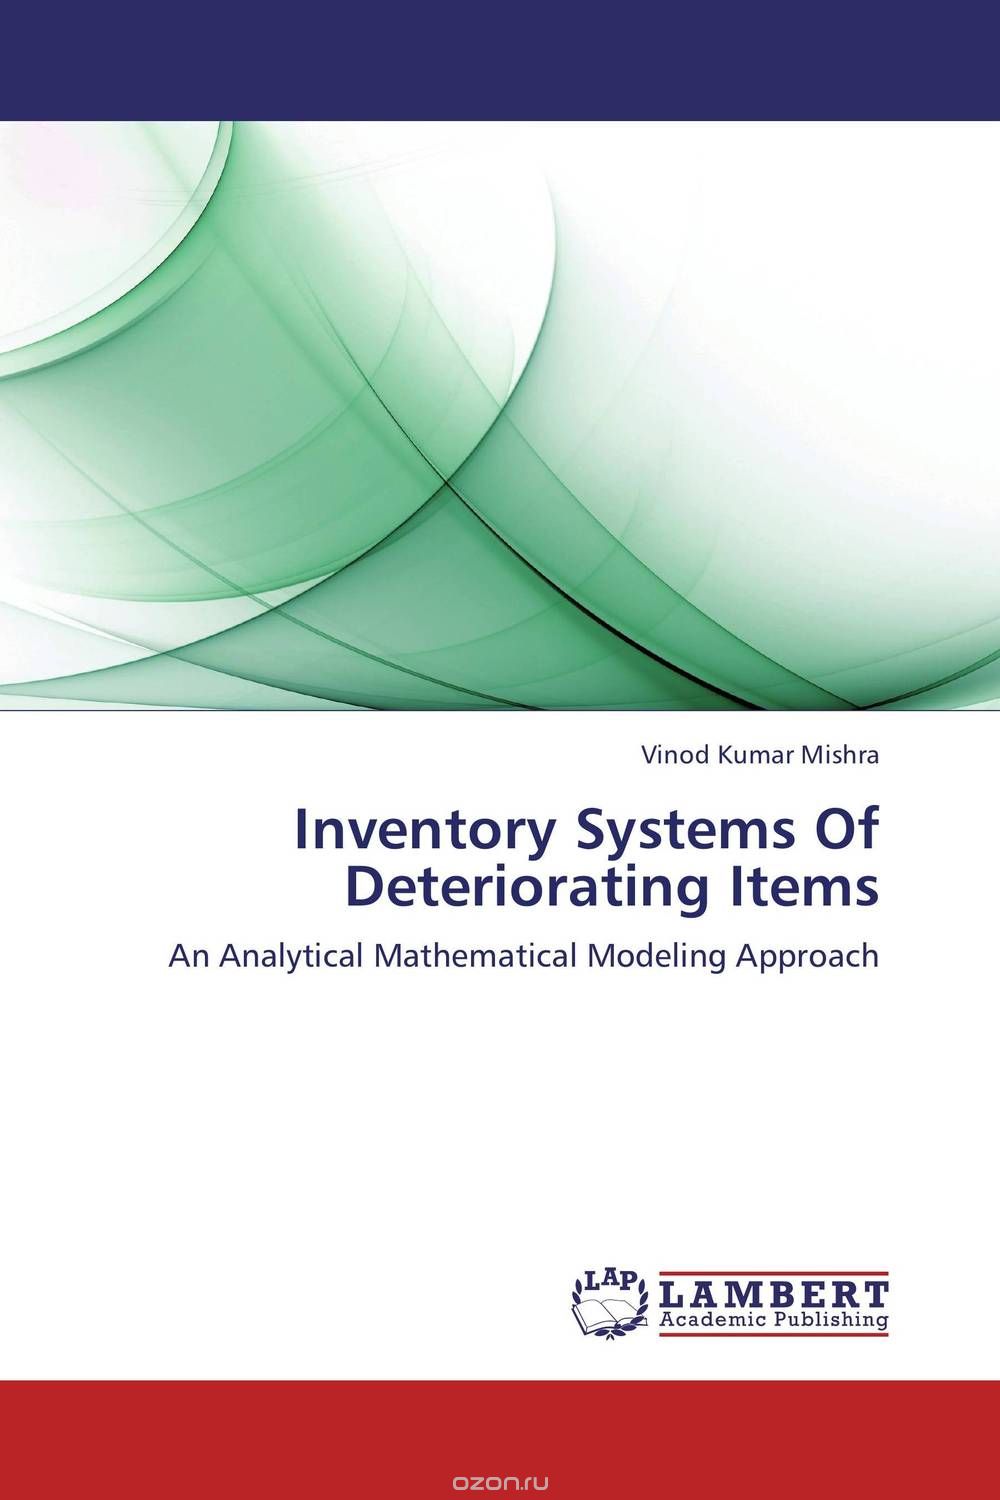 Скачать книгу "Inventory Systems Of Deteriorating Items"